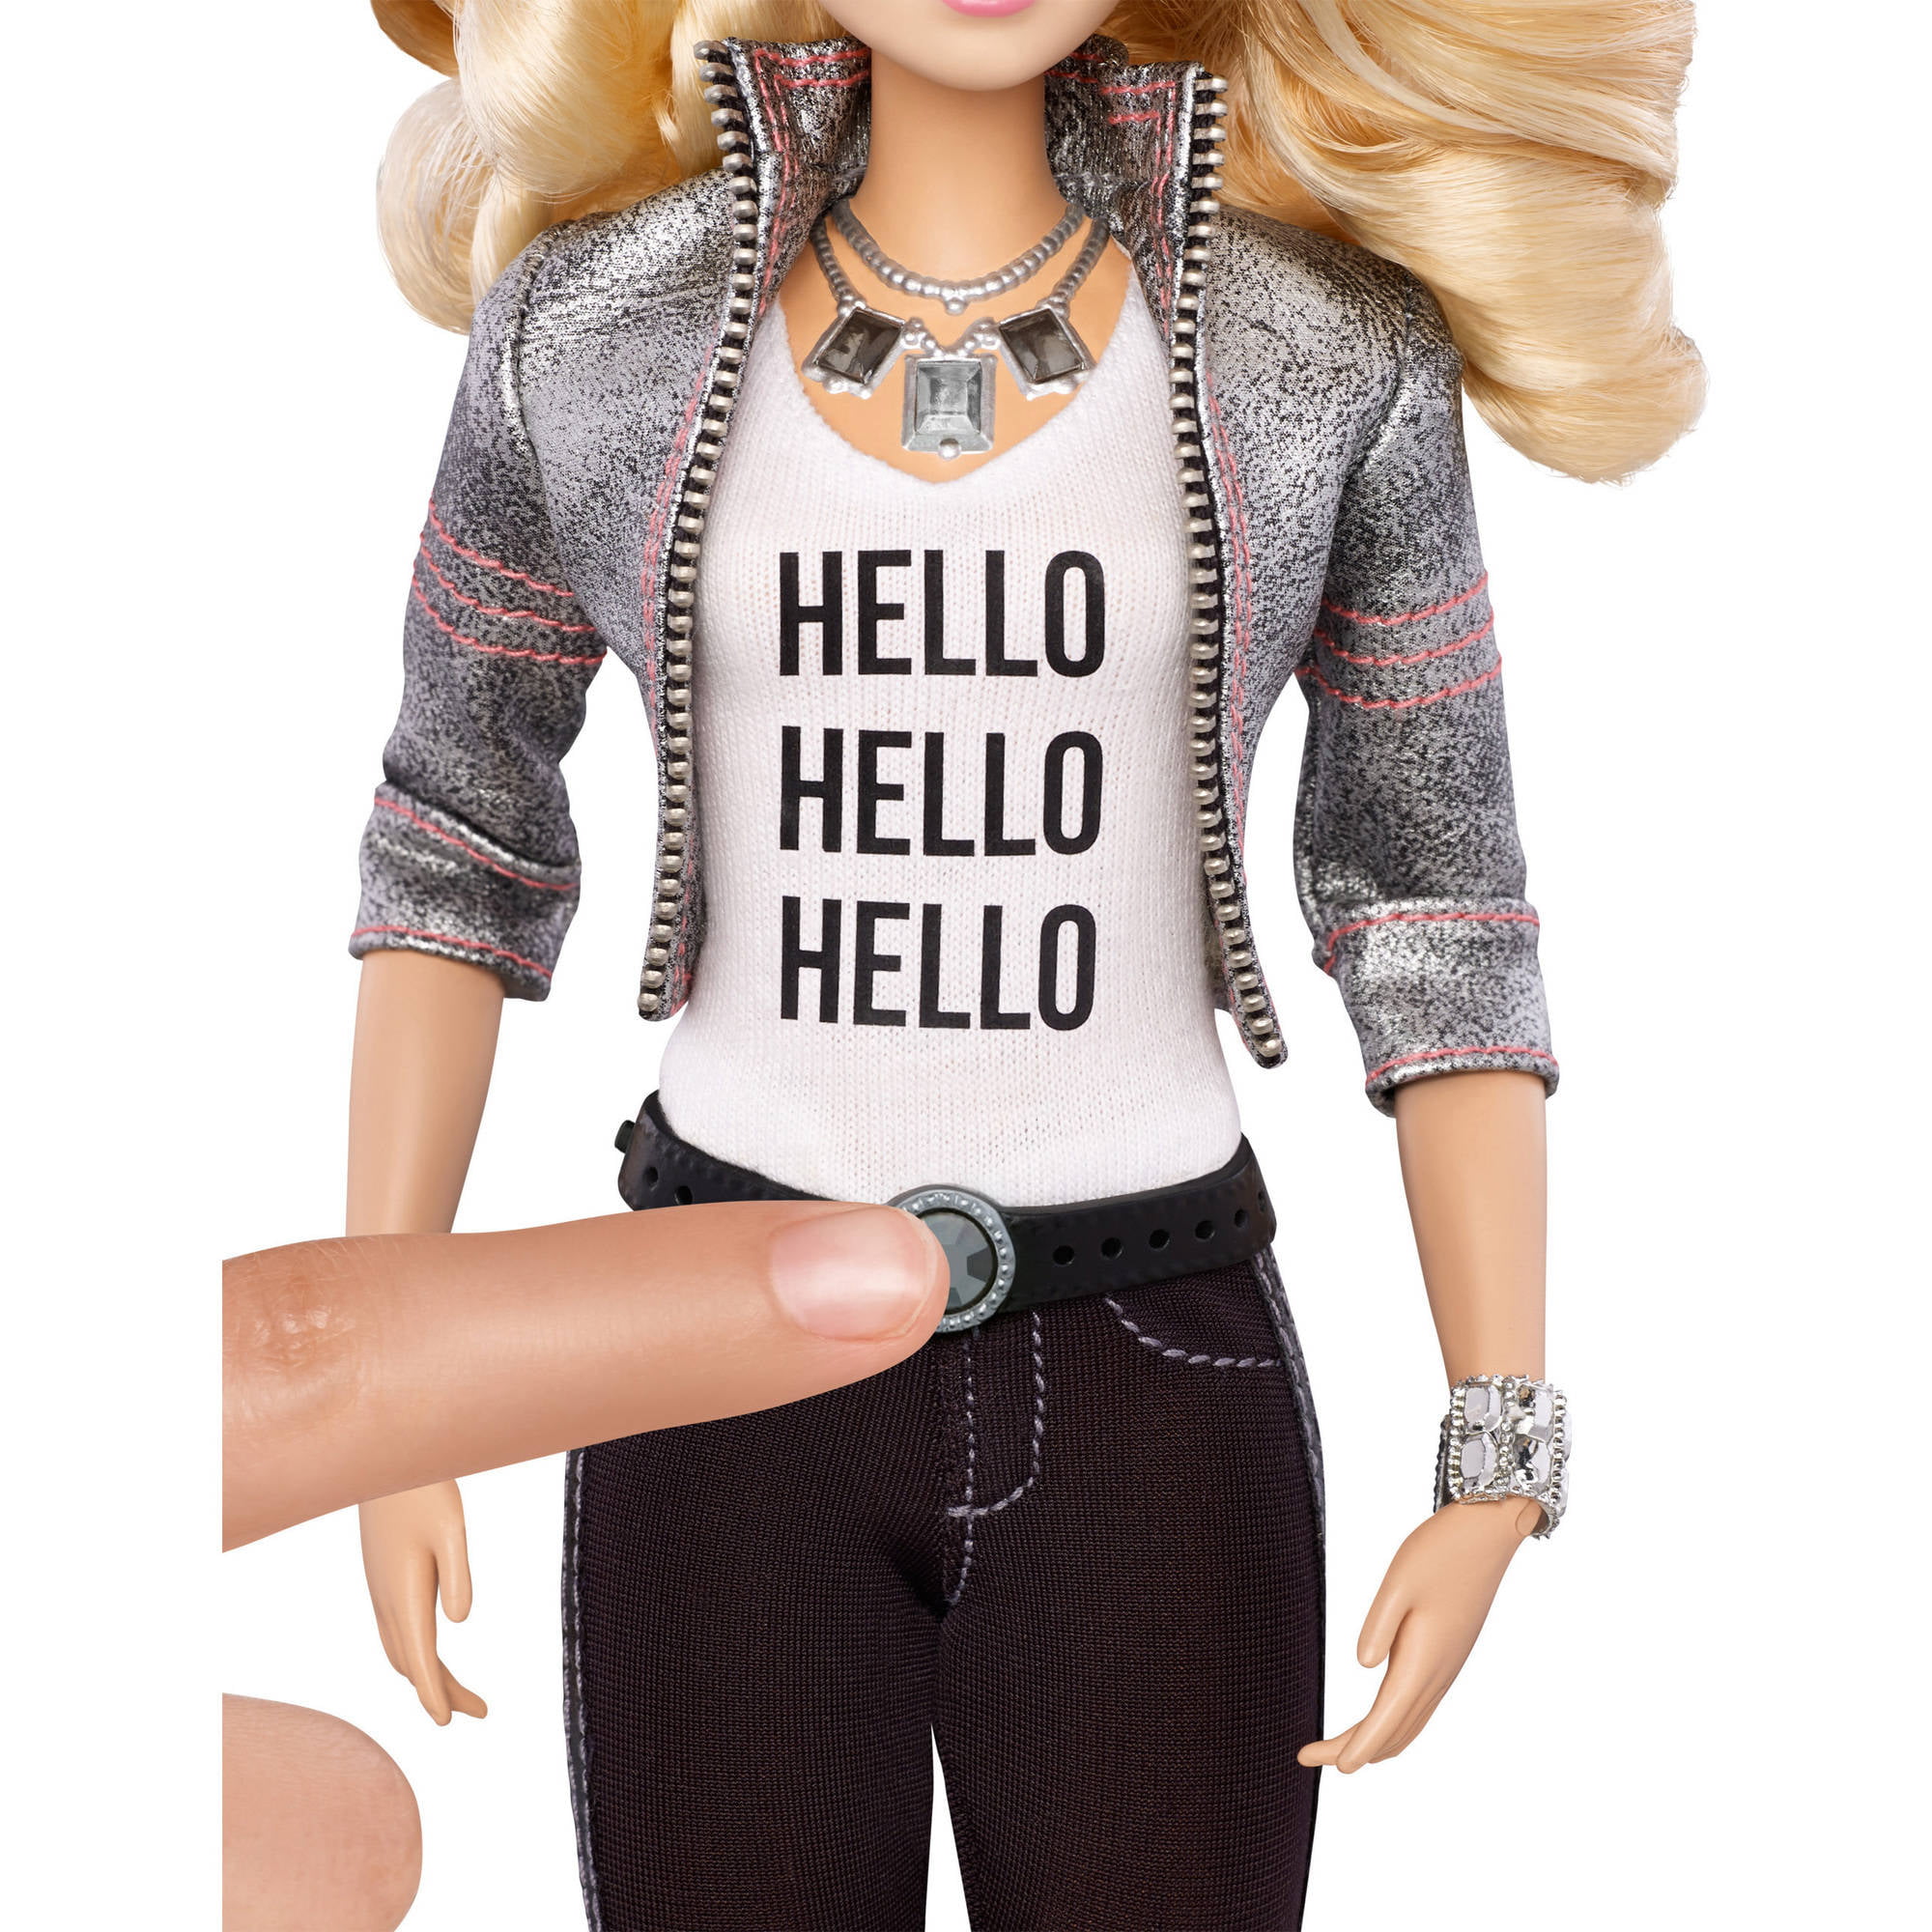 Рок привет кукла. Hello hello hello Barbie кукла. Hello Барби. Кукла Барби привет. Helloy Helloy Barbie.